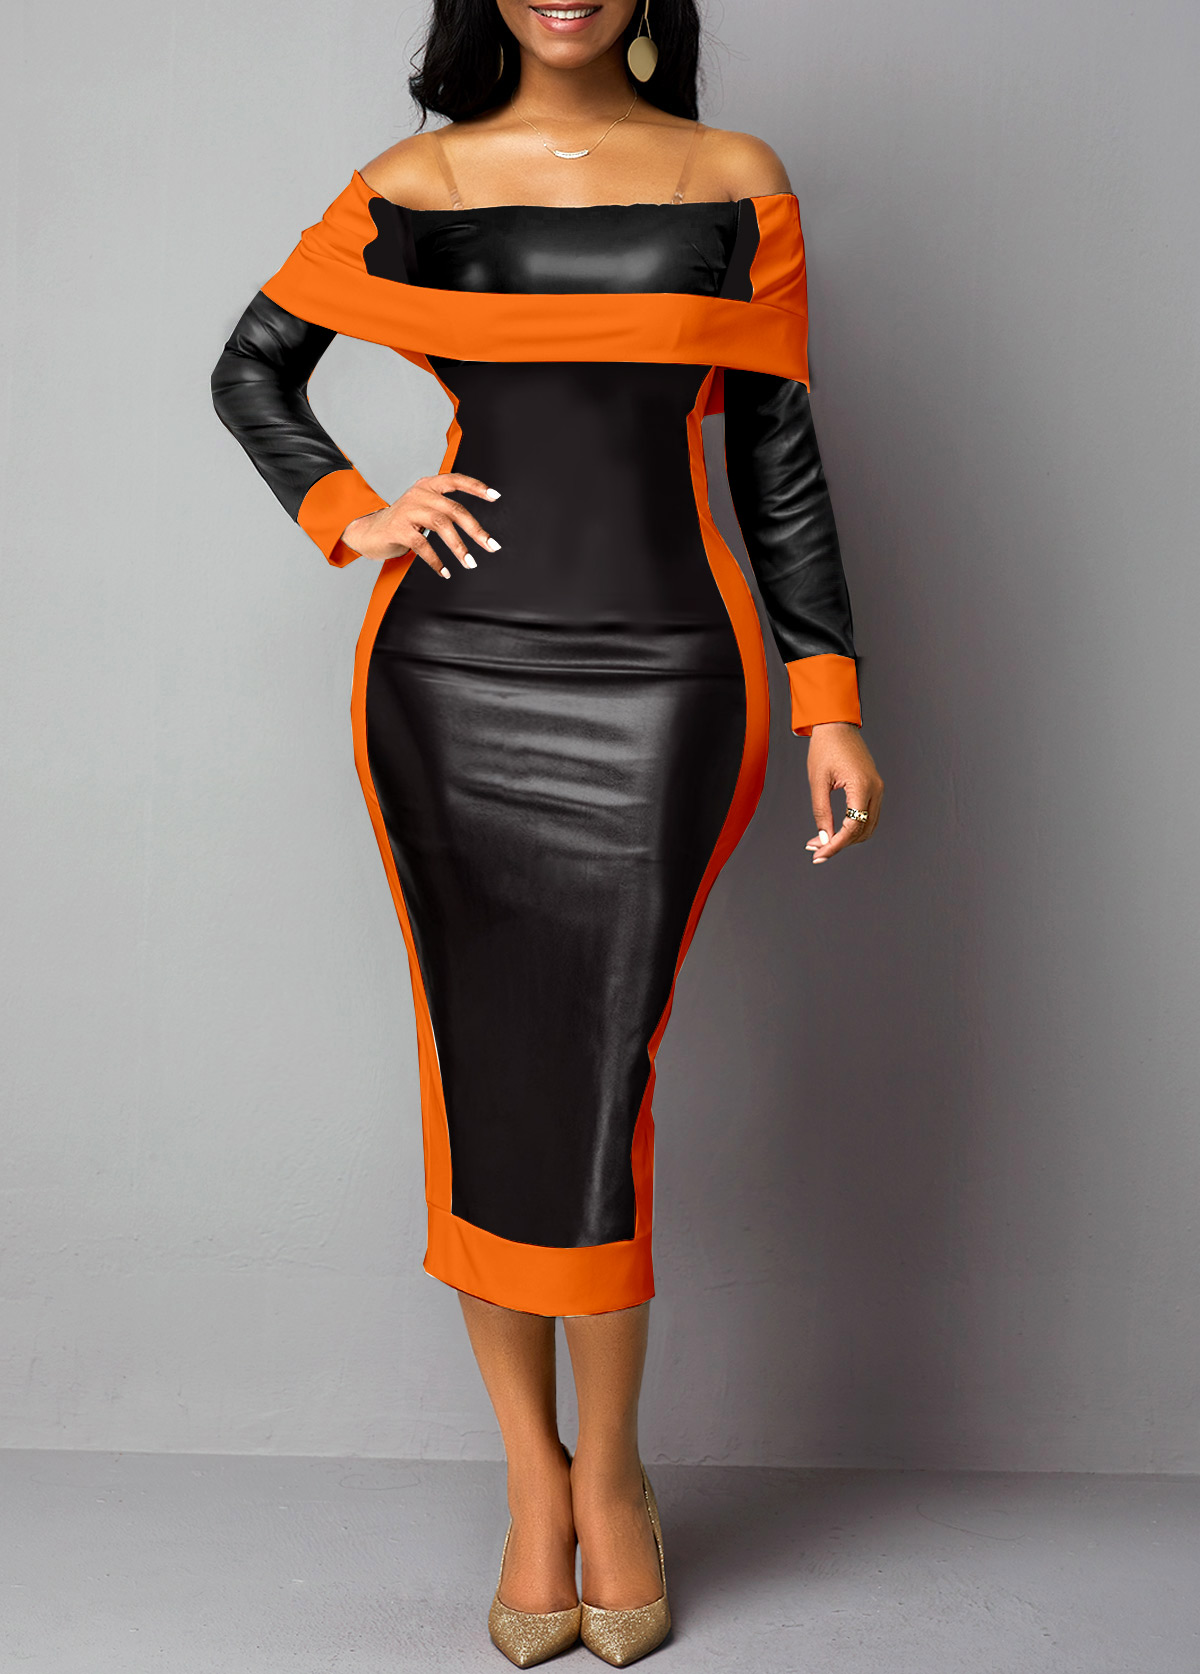 Schulterfreies orangefarbenes figurbetontes Kleid aus Rotita-Kunstleder